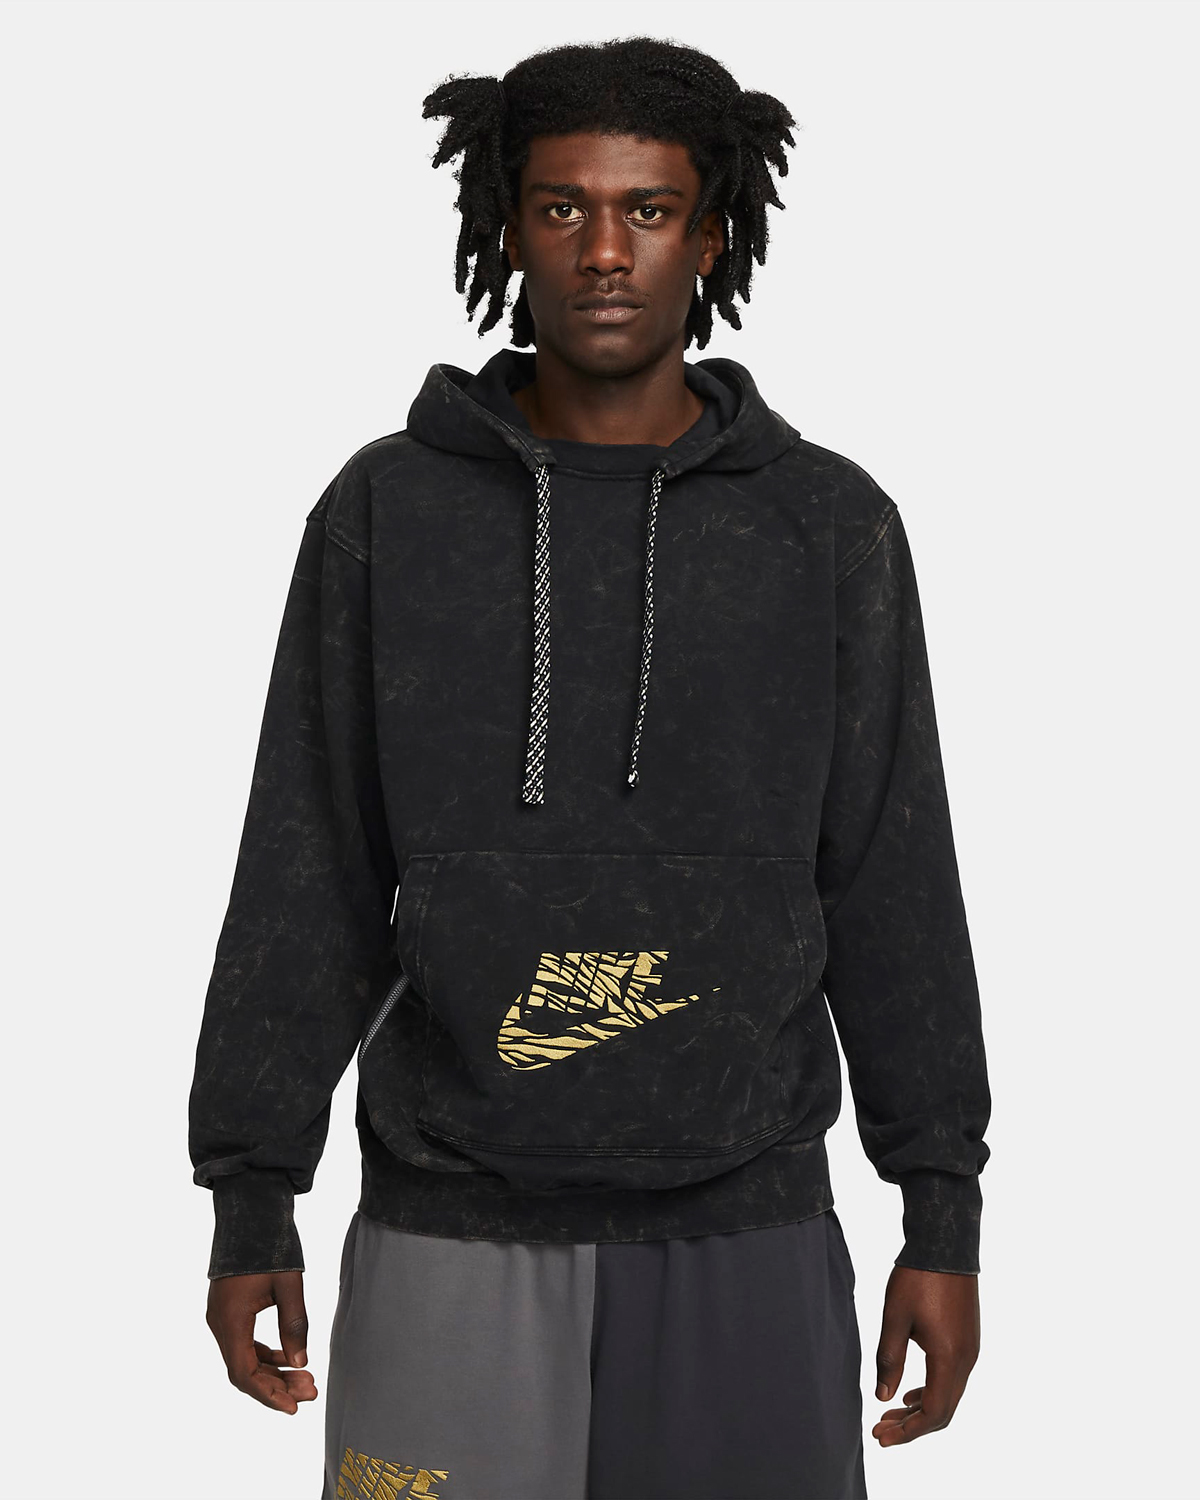 Nike-Standard-Issue-Basketball-Hoodie-Black-Gold